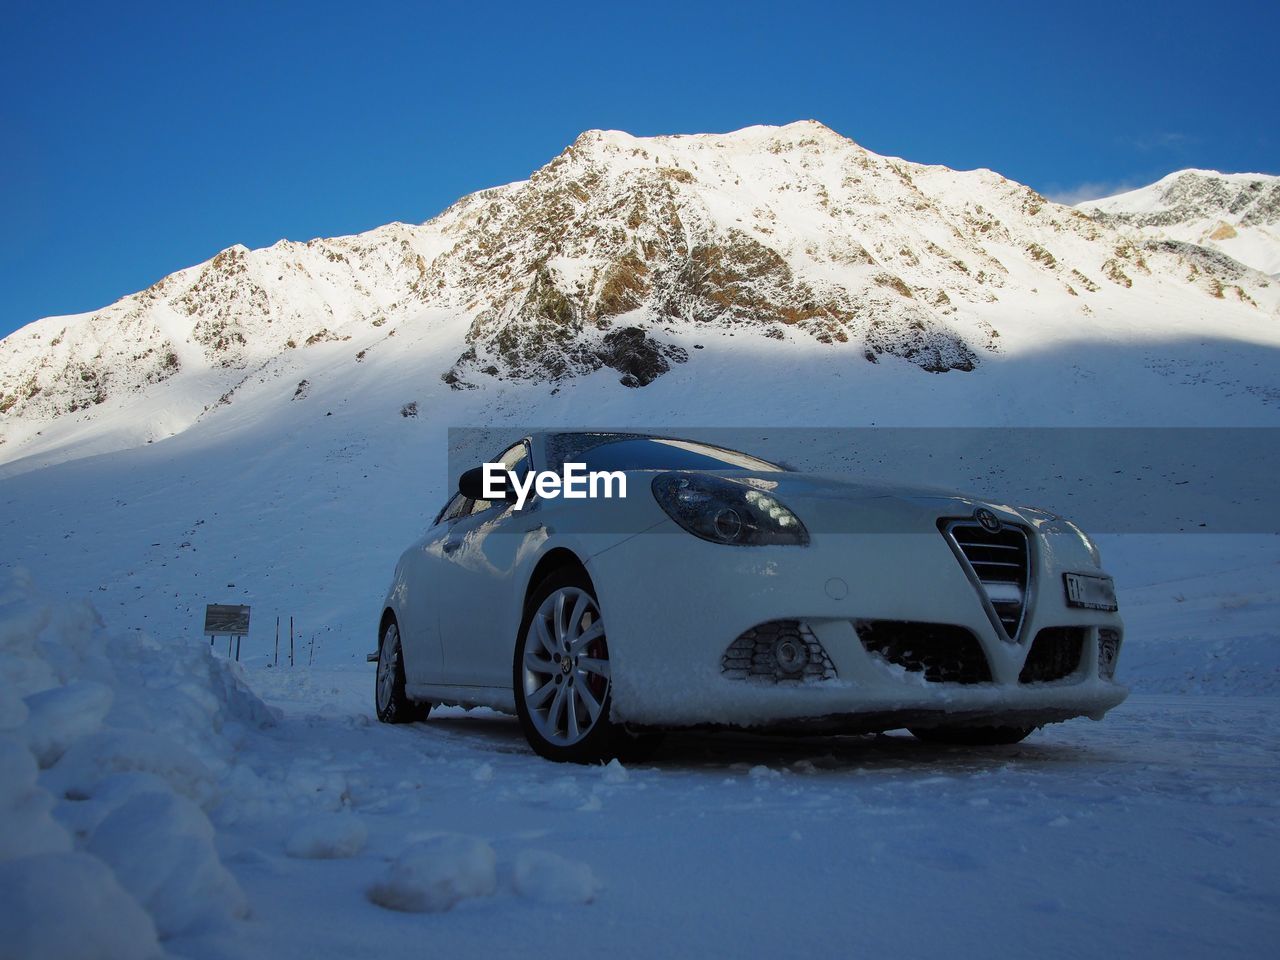 CAR ON SNOW COVERED LANDSCAPE